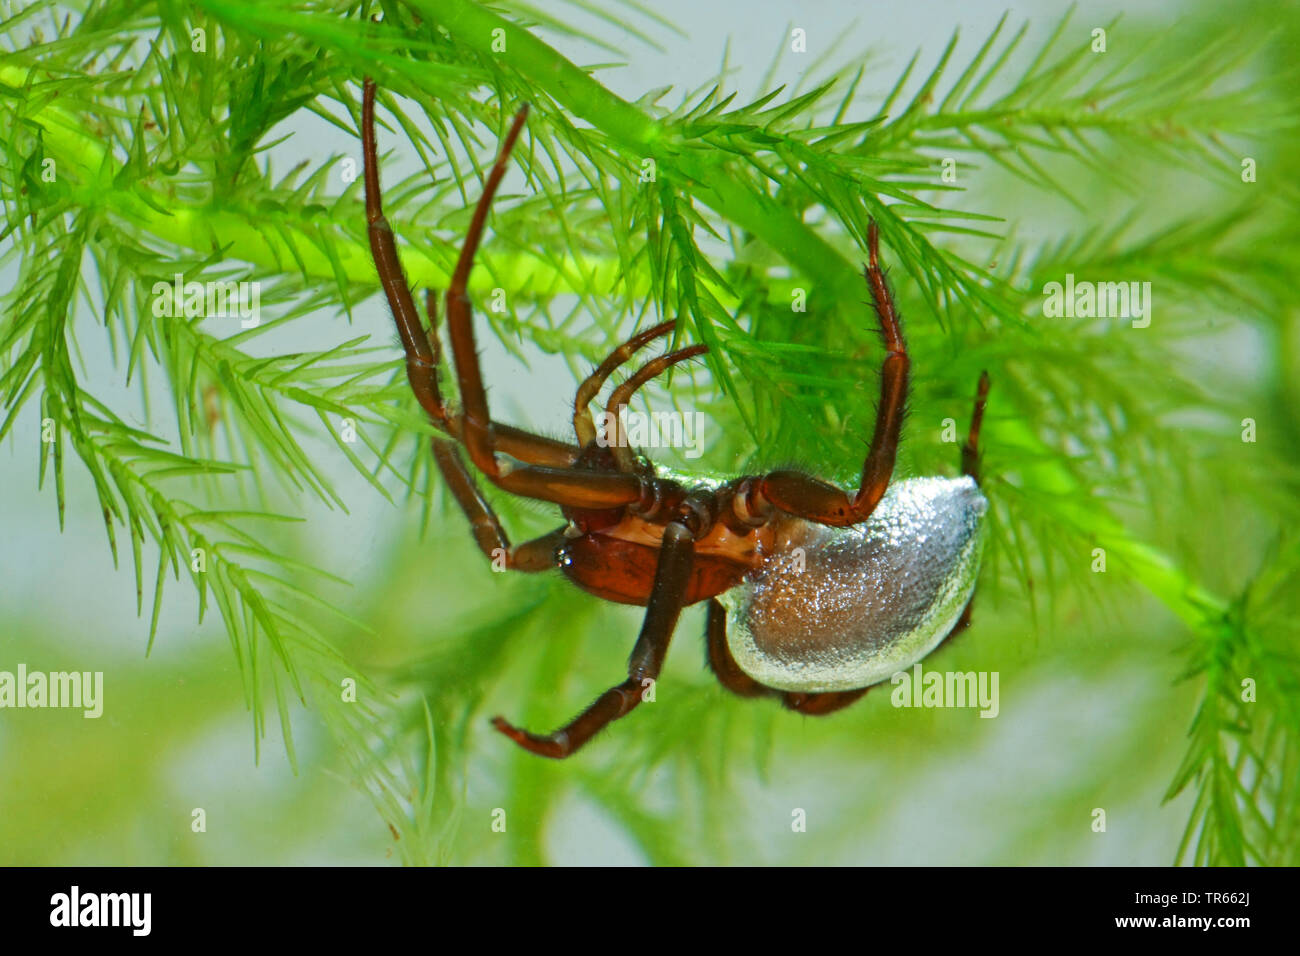 European water spider (Argyroneta aquatica), transporting an air bubble under water , Germany Stock Photo